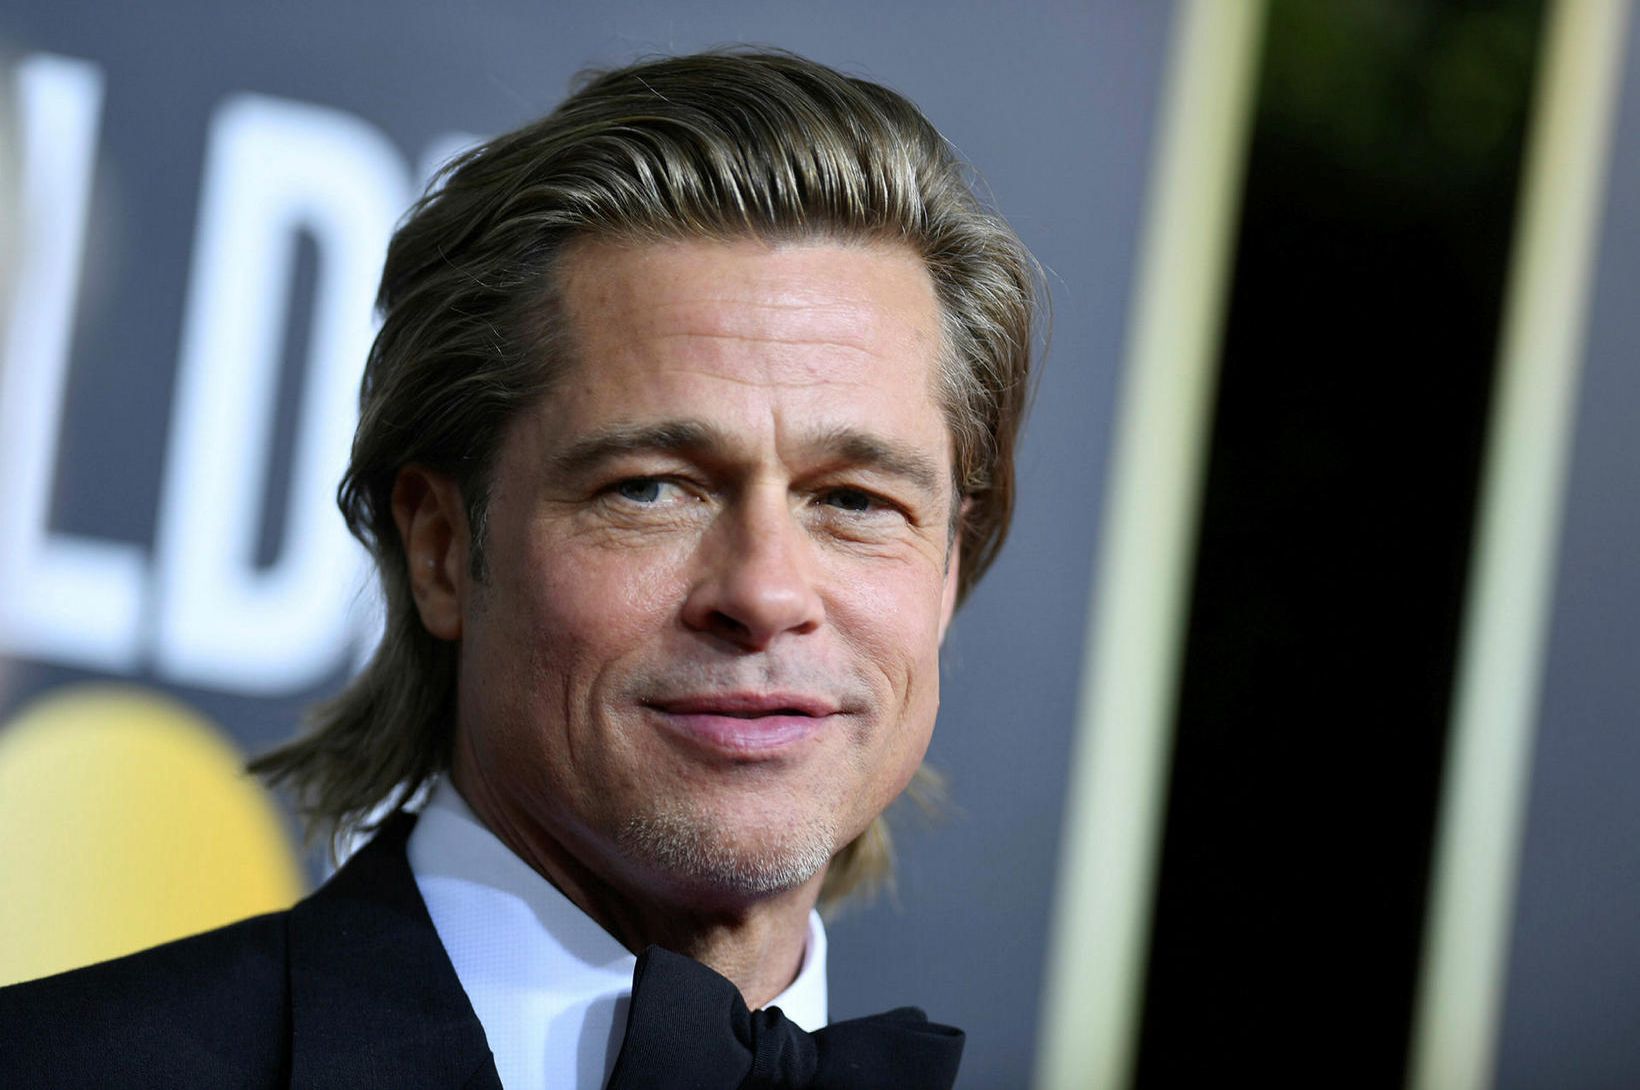 Brad Pitt segir einkalíf sitt vera stórslys